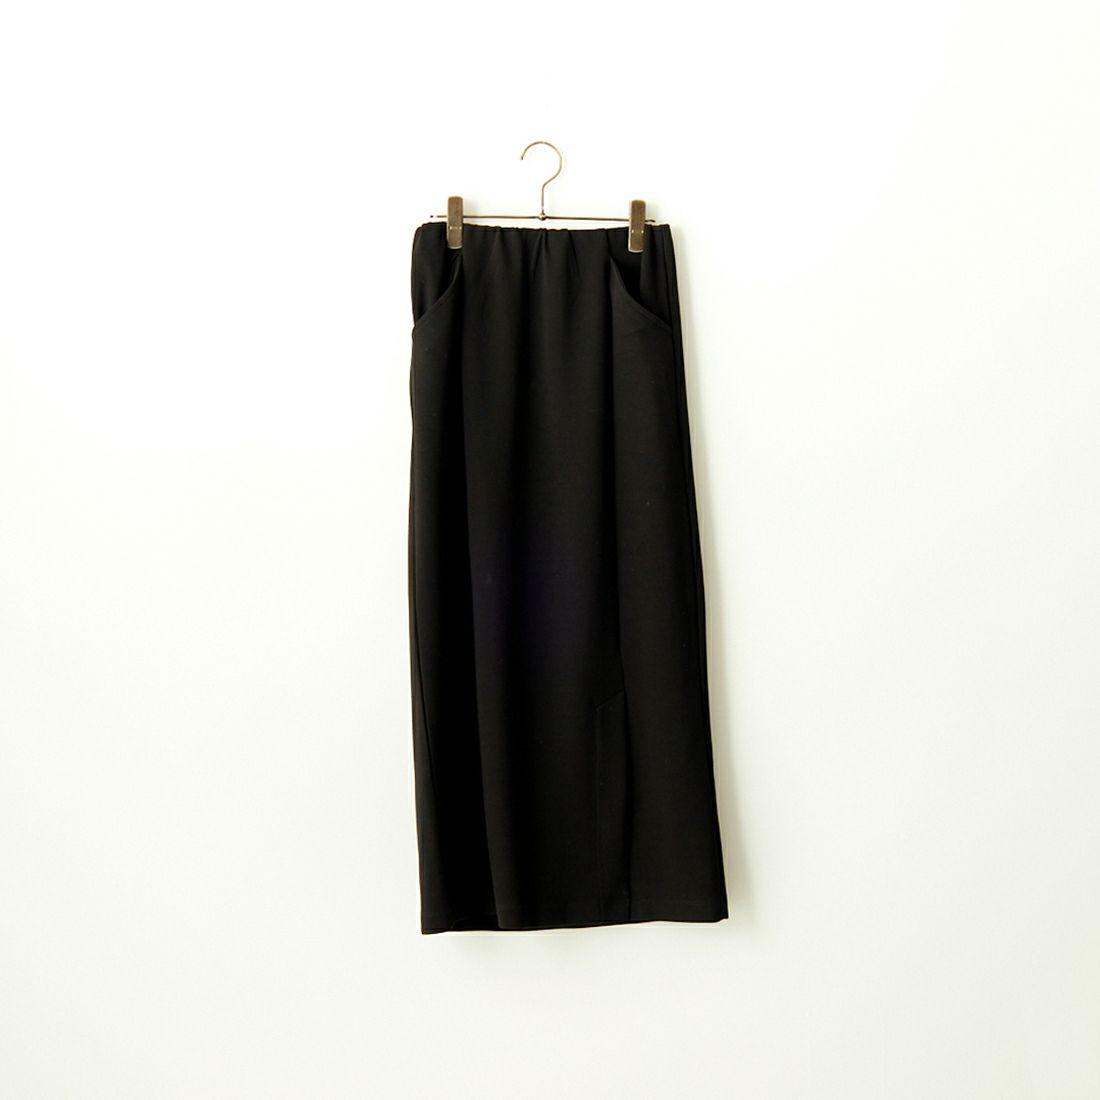 Maison de L'allure [メゾン ドゥ ラリュール] 切替デザイン ナロースカート [23142025] 09 BLACK